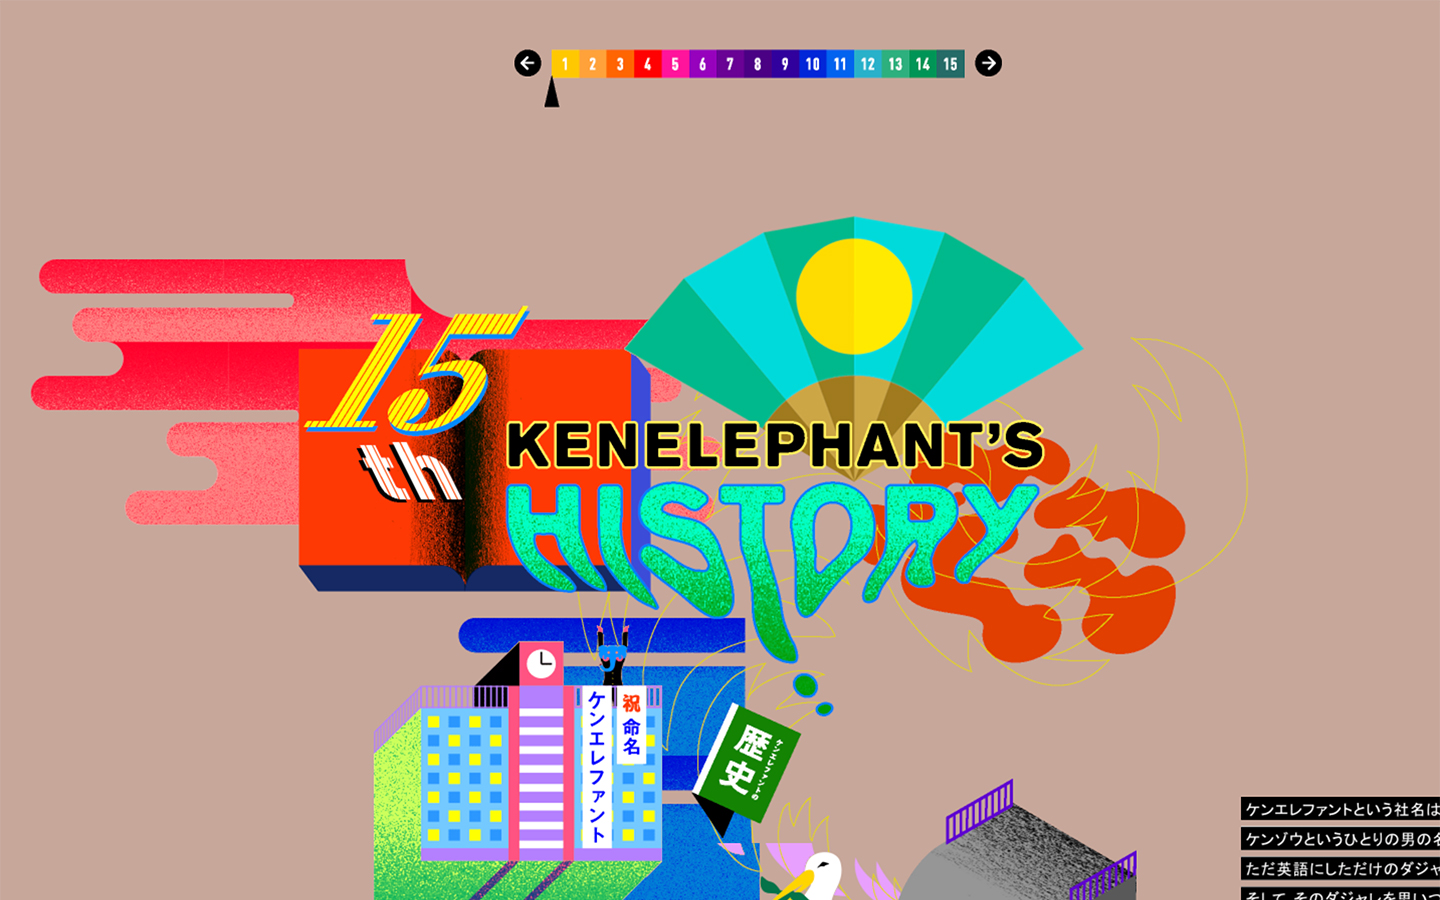 KENELEPHANT’S 15TH HISTORY